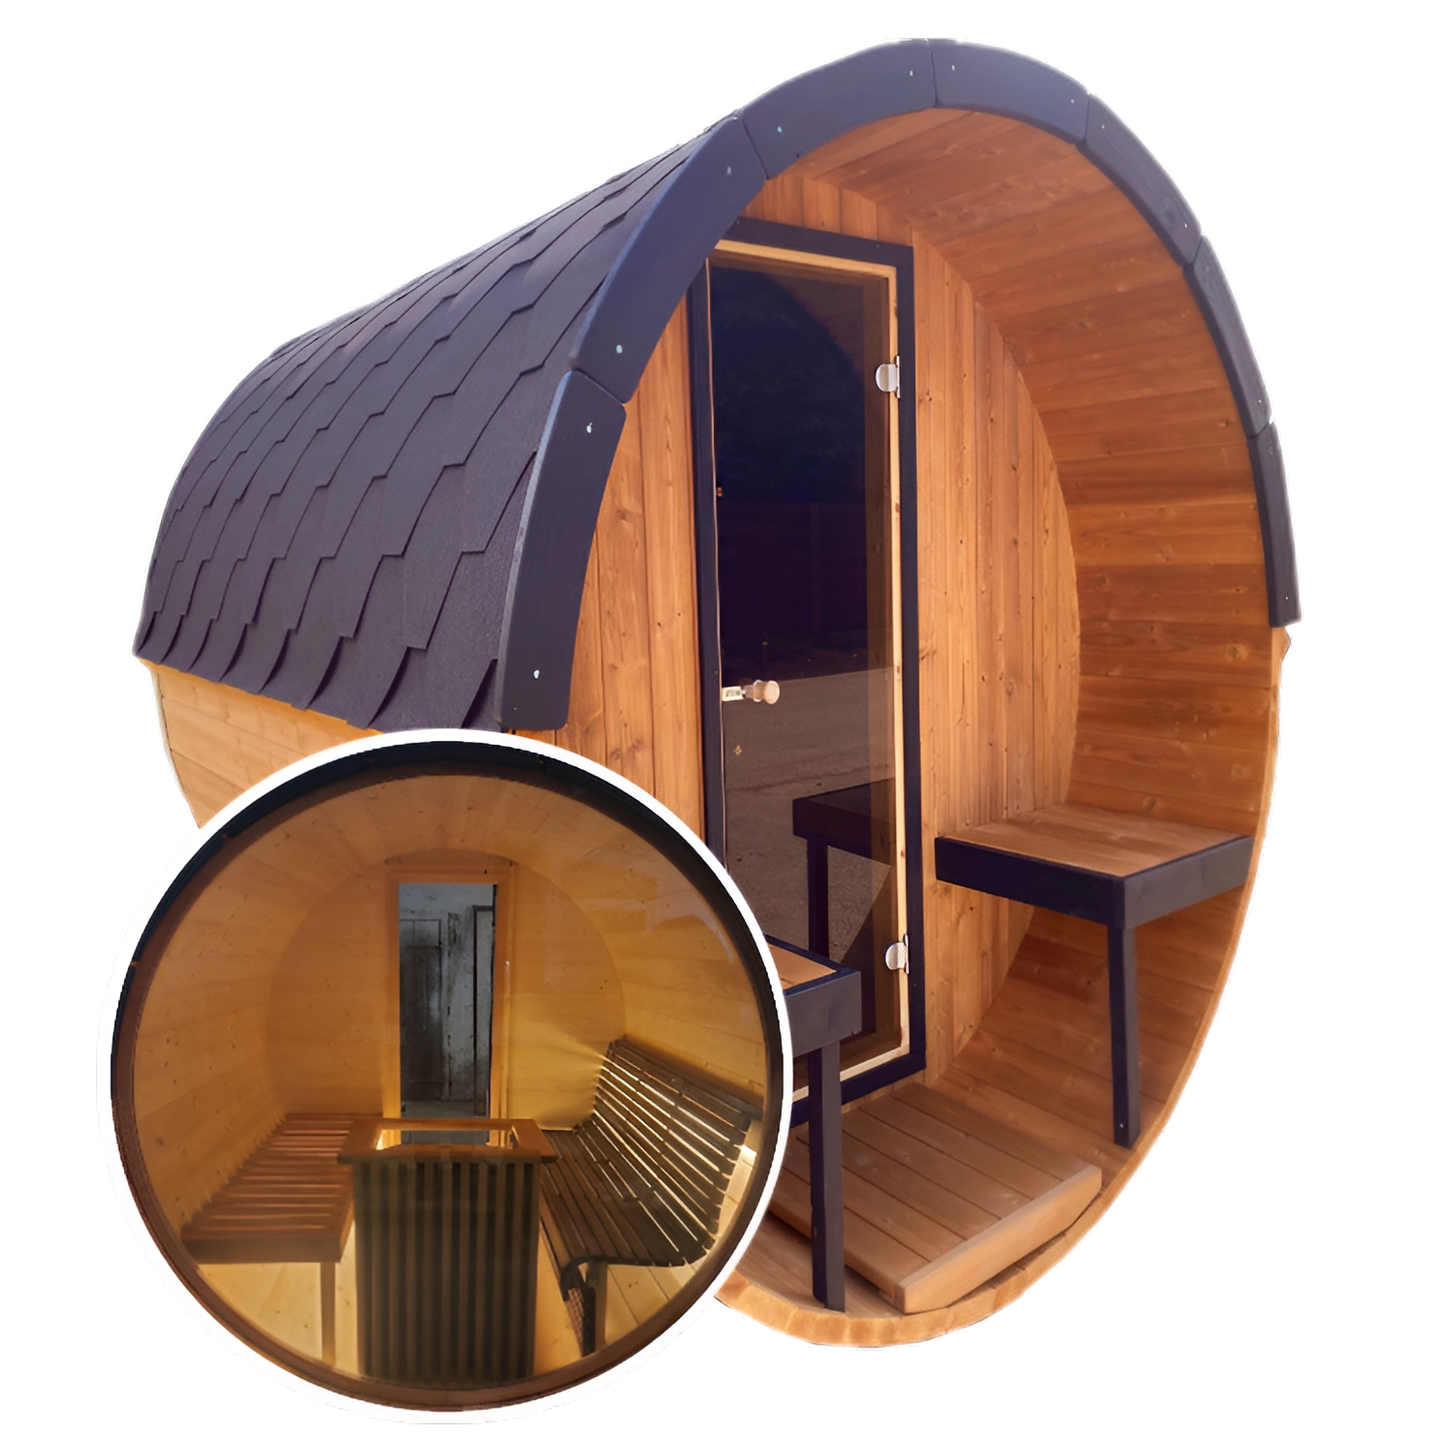 Barrel 3m Outdoor Sauna with Panoramic Rear Glass